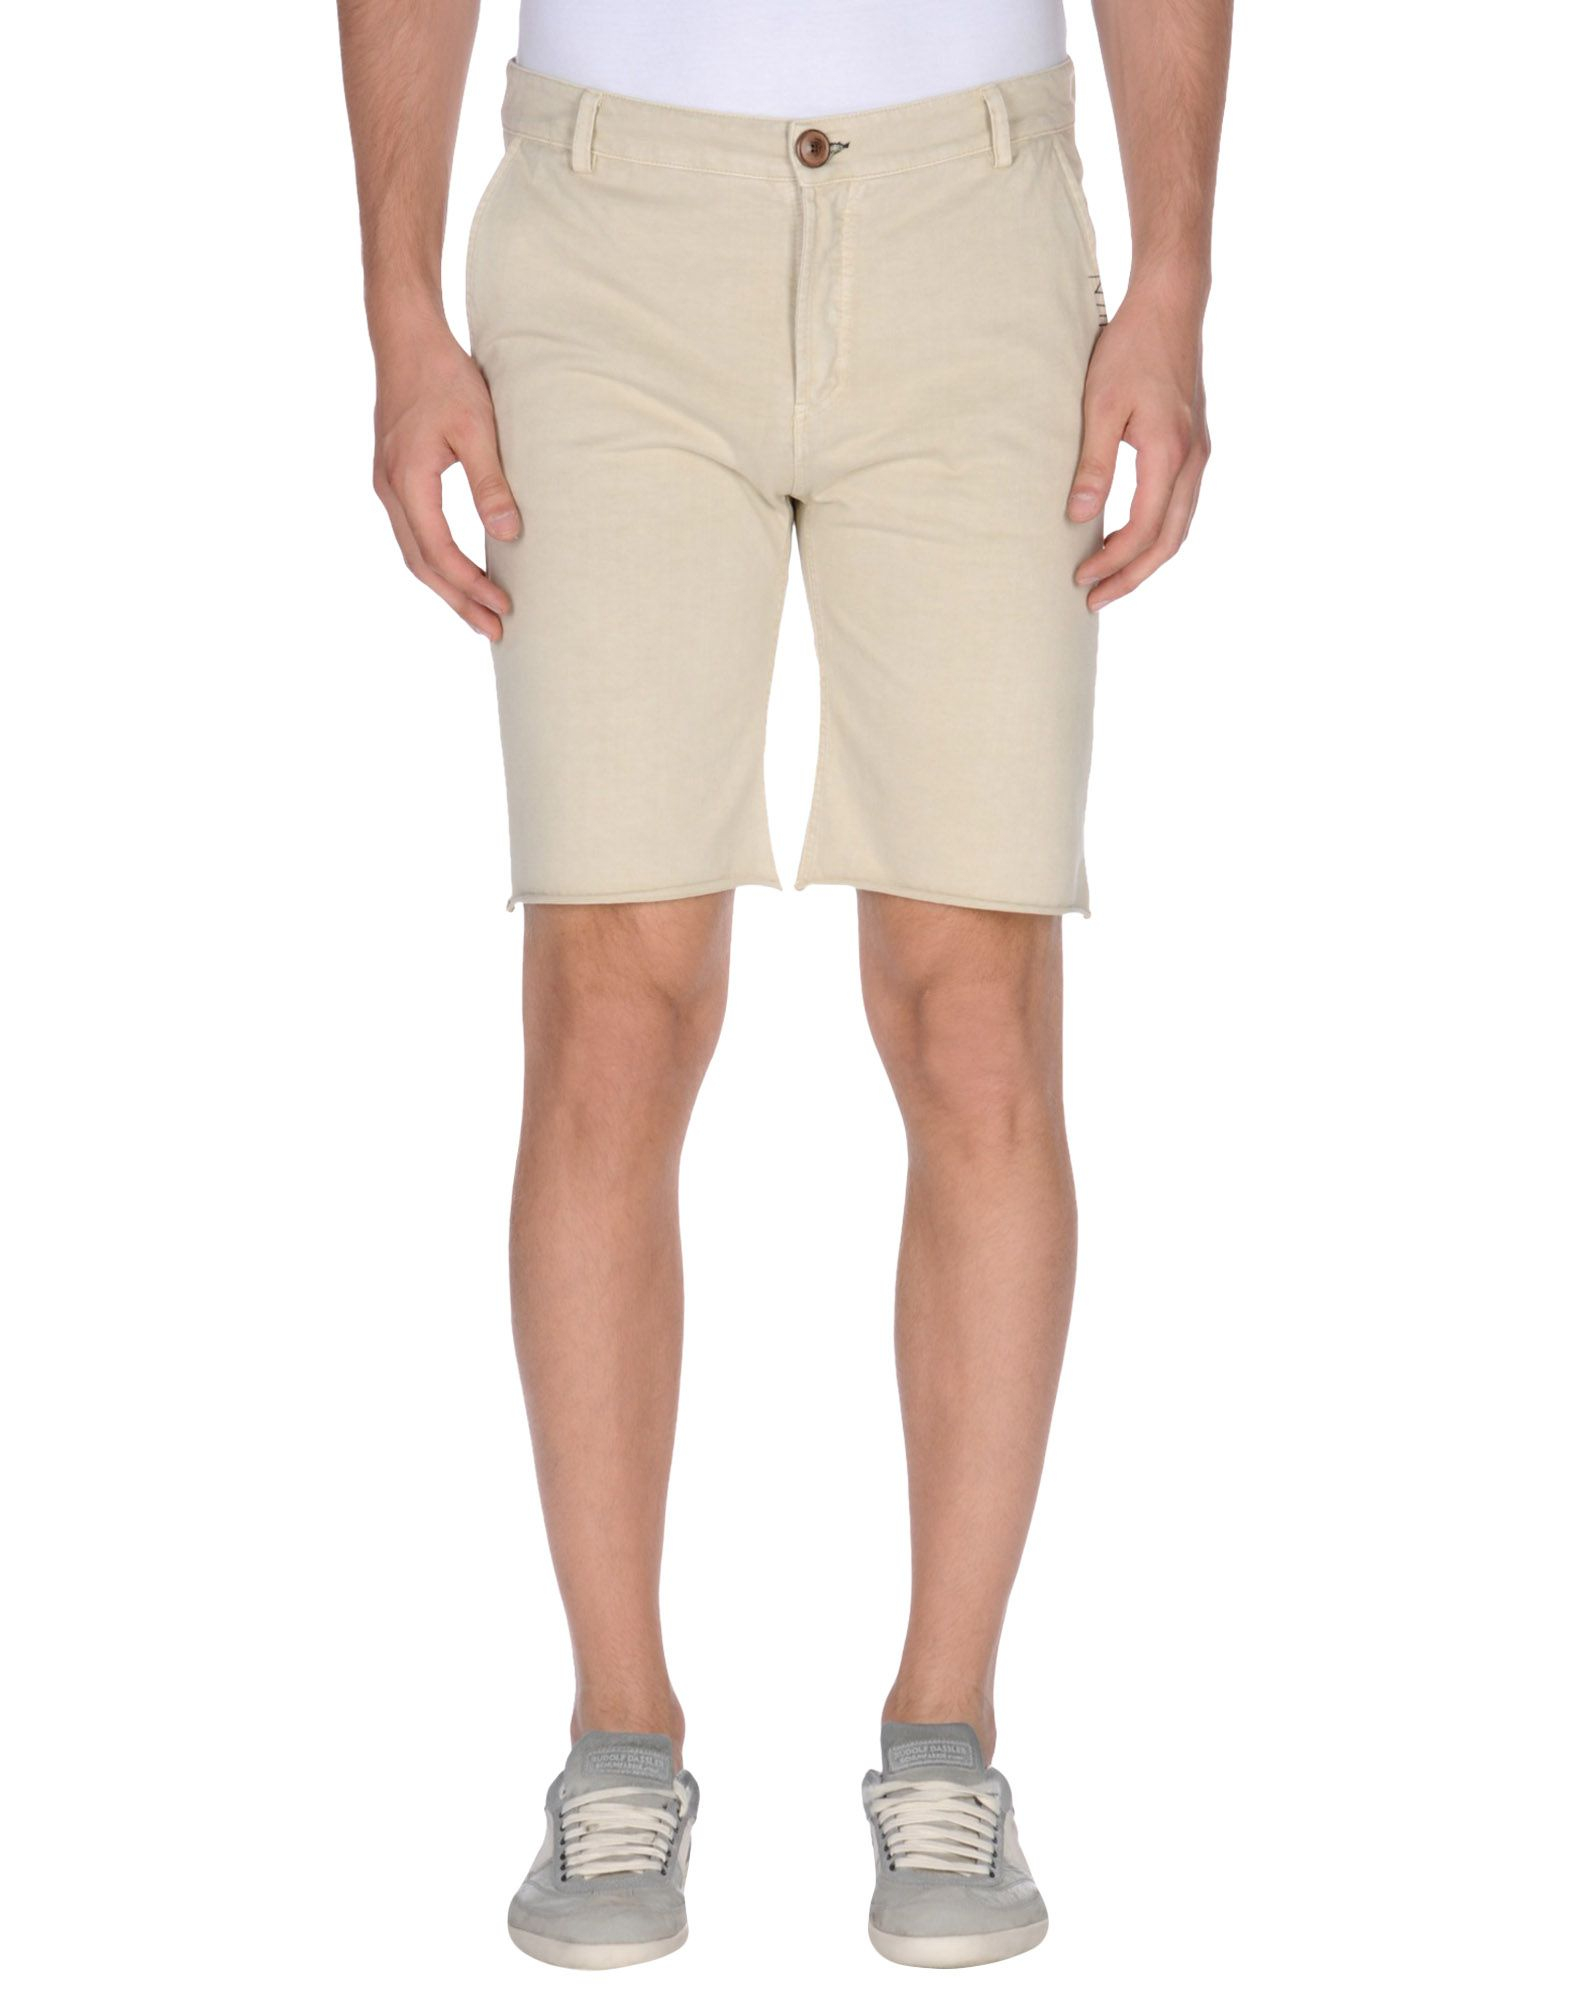 Fiver Bermuda Shorts in Beige for Men - Save 70% | Lyst